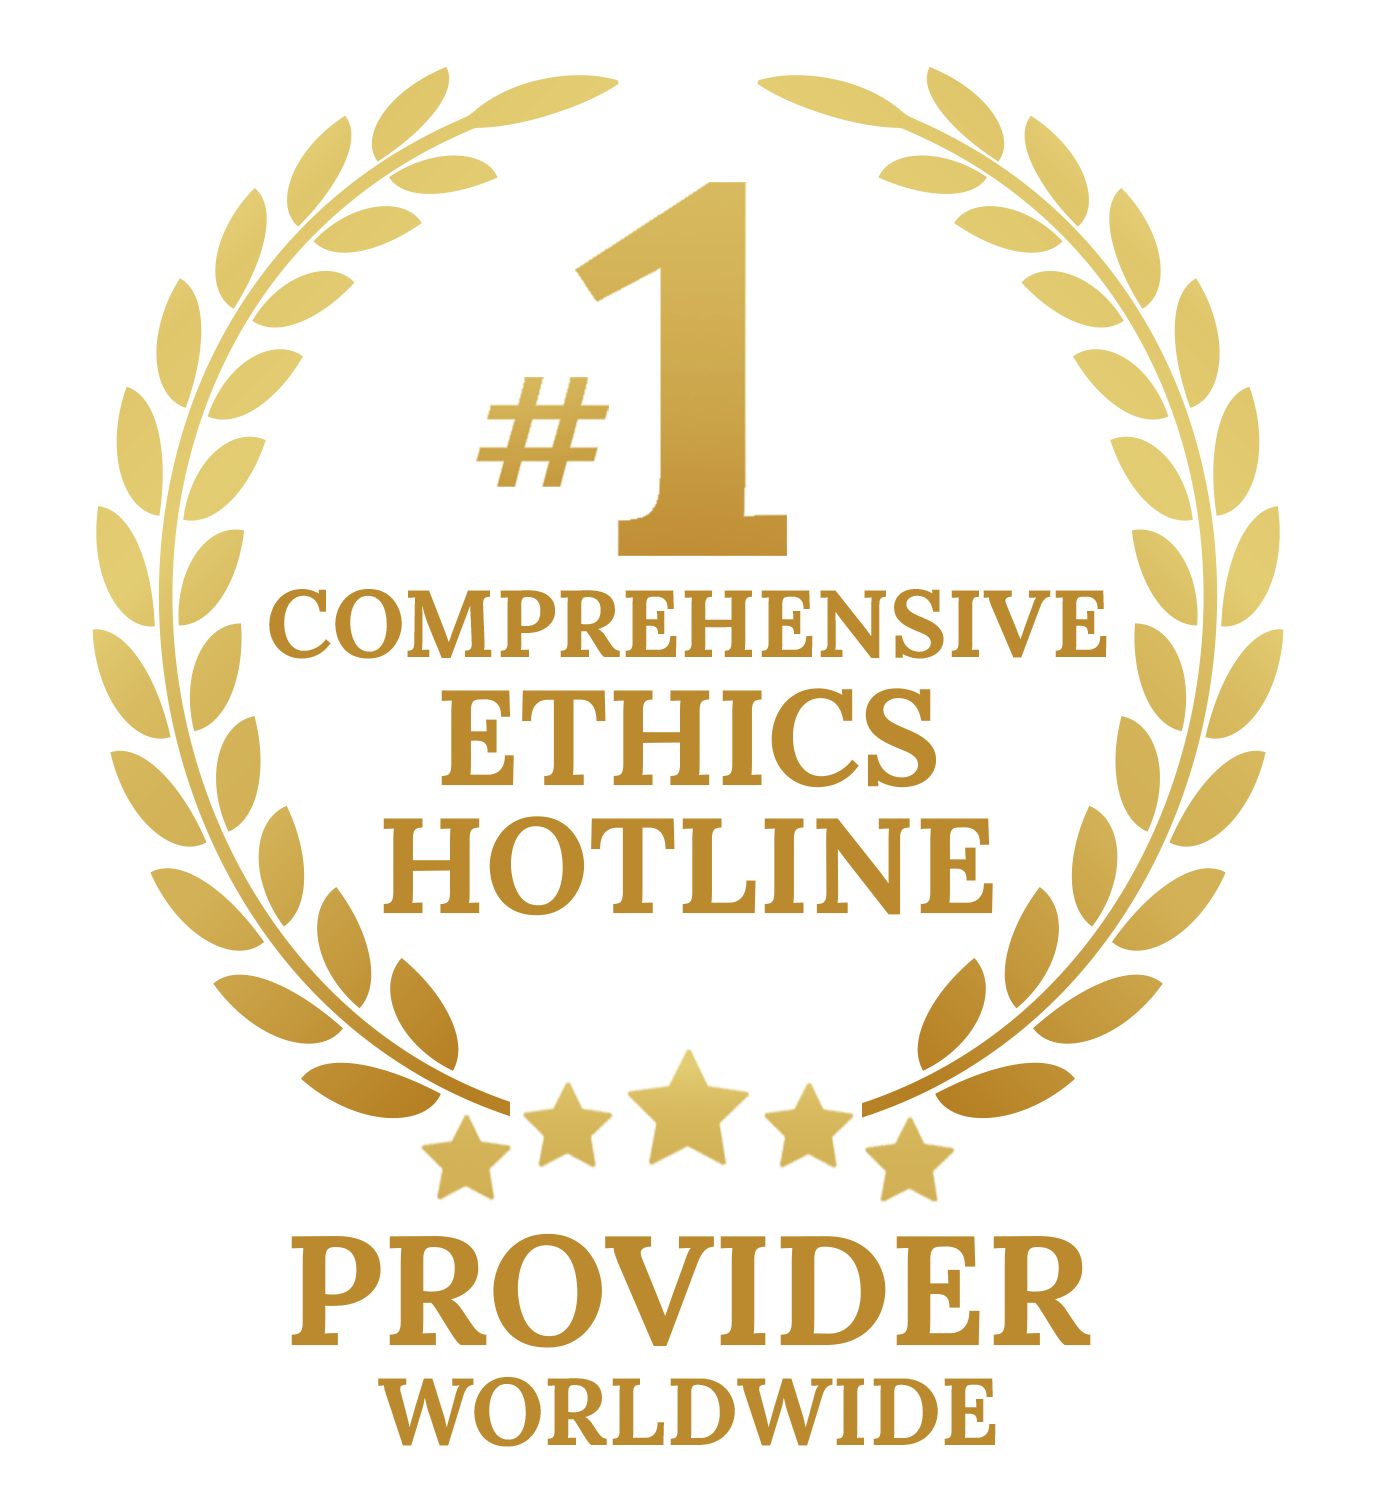 Syntrio No.1 Comprehensive Ethics Hotline Provider Worldwide